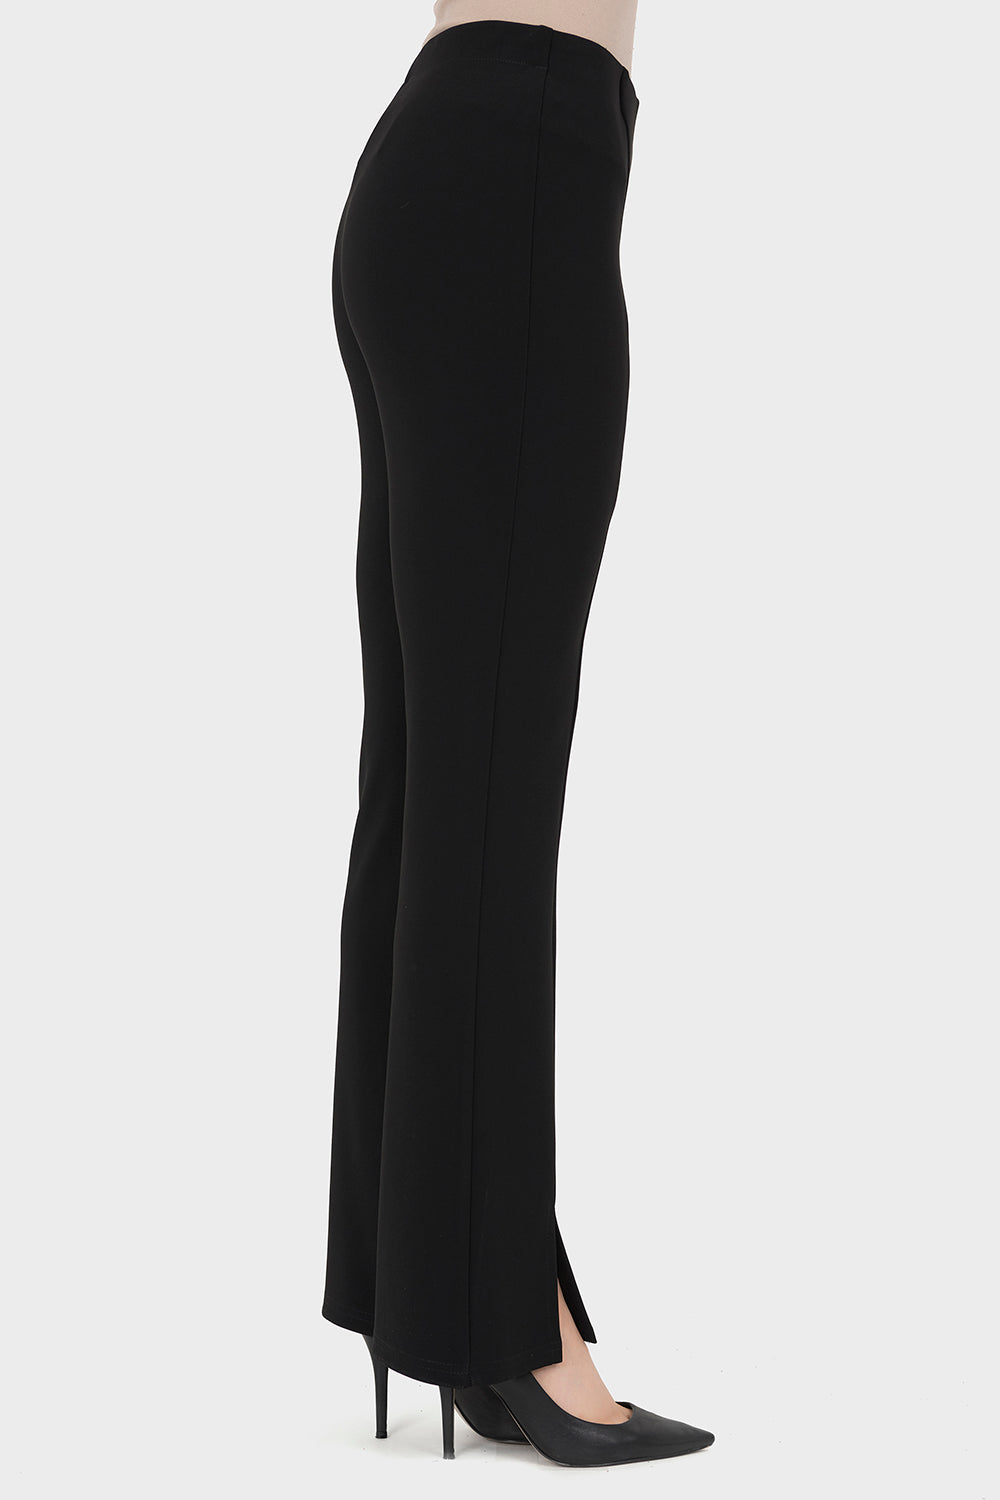 Joseph Ribkoff Black Pant Style 193112